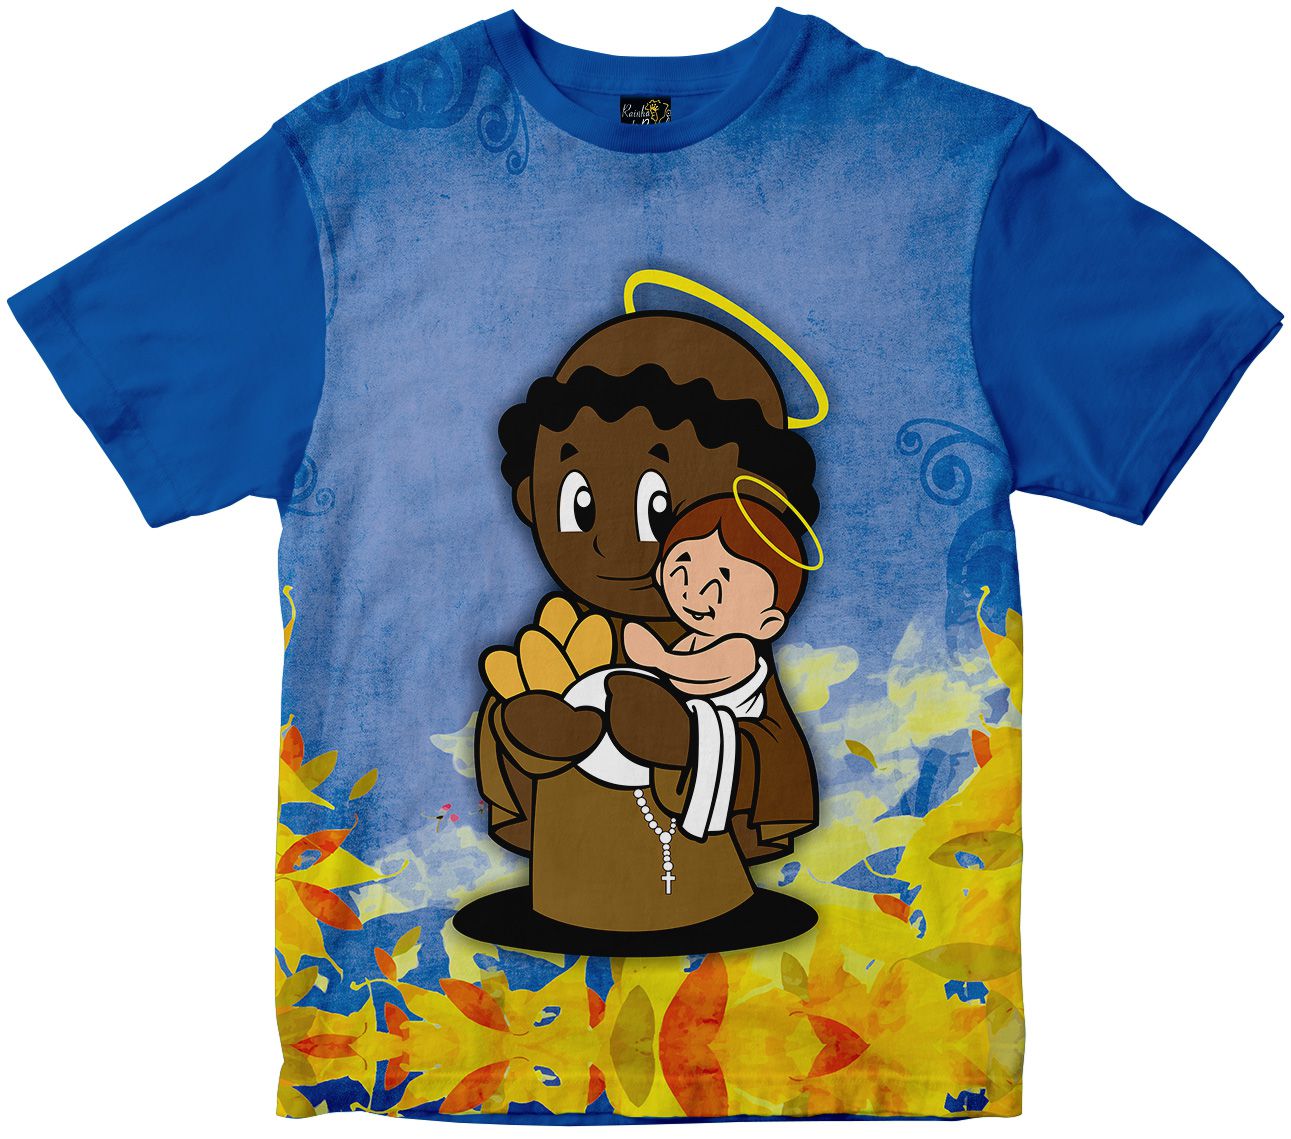 Moana Baby Cartoon infantil camiseta estampada, camiseta de manga